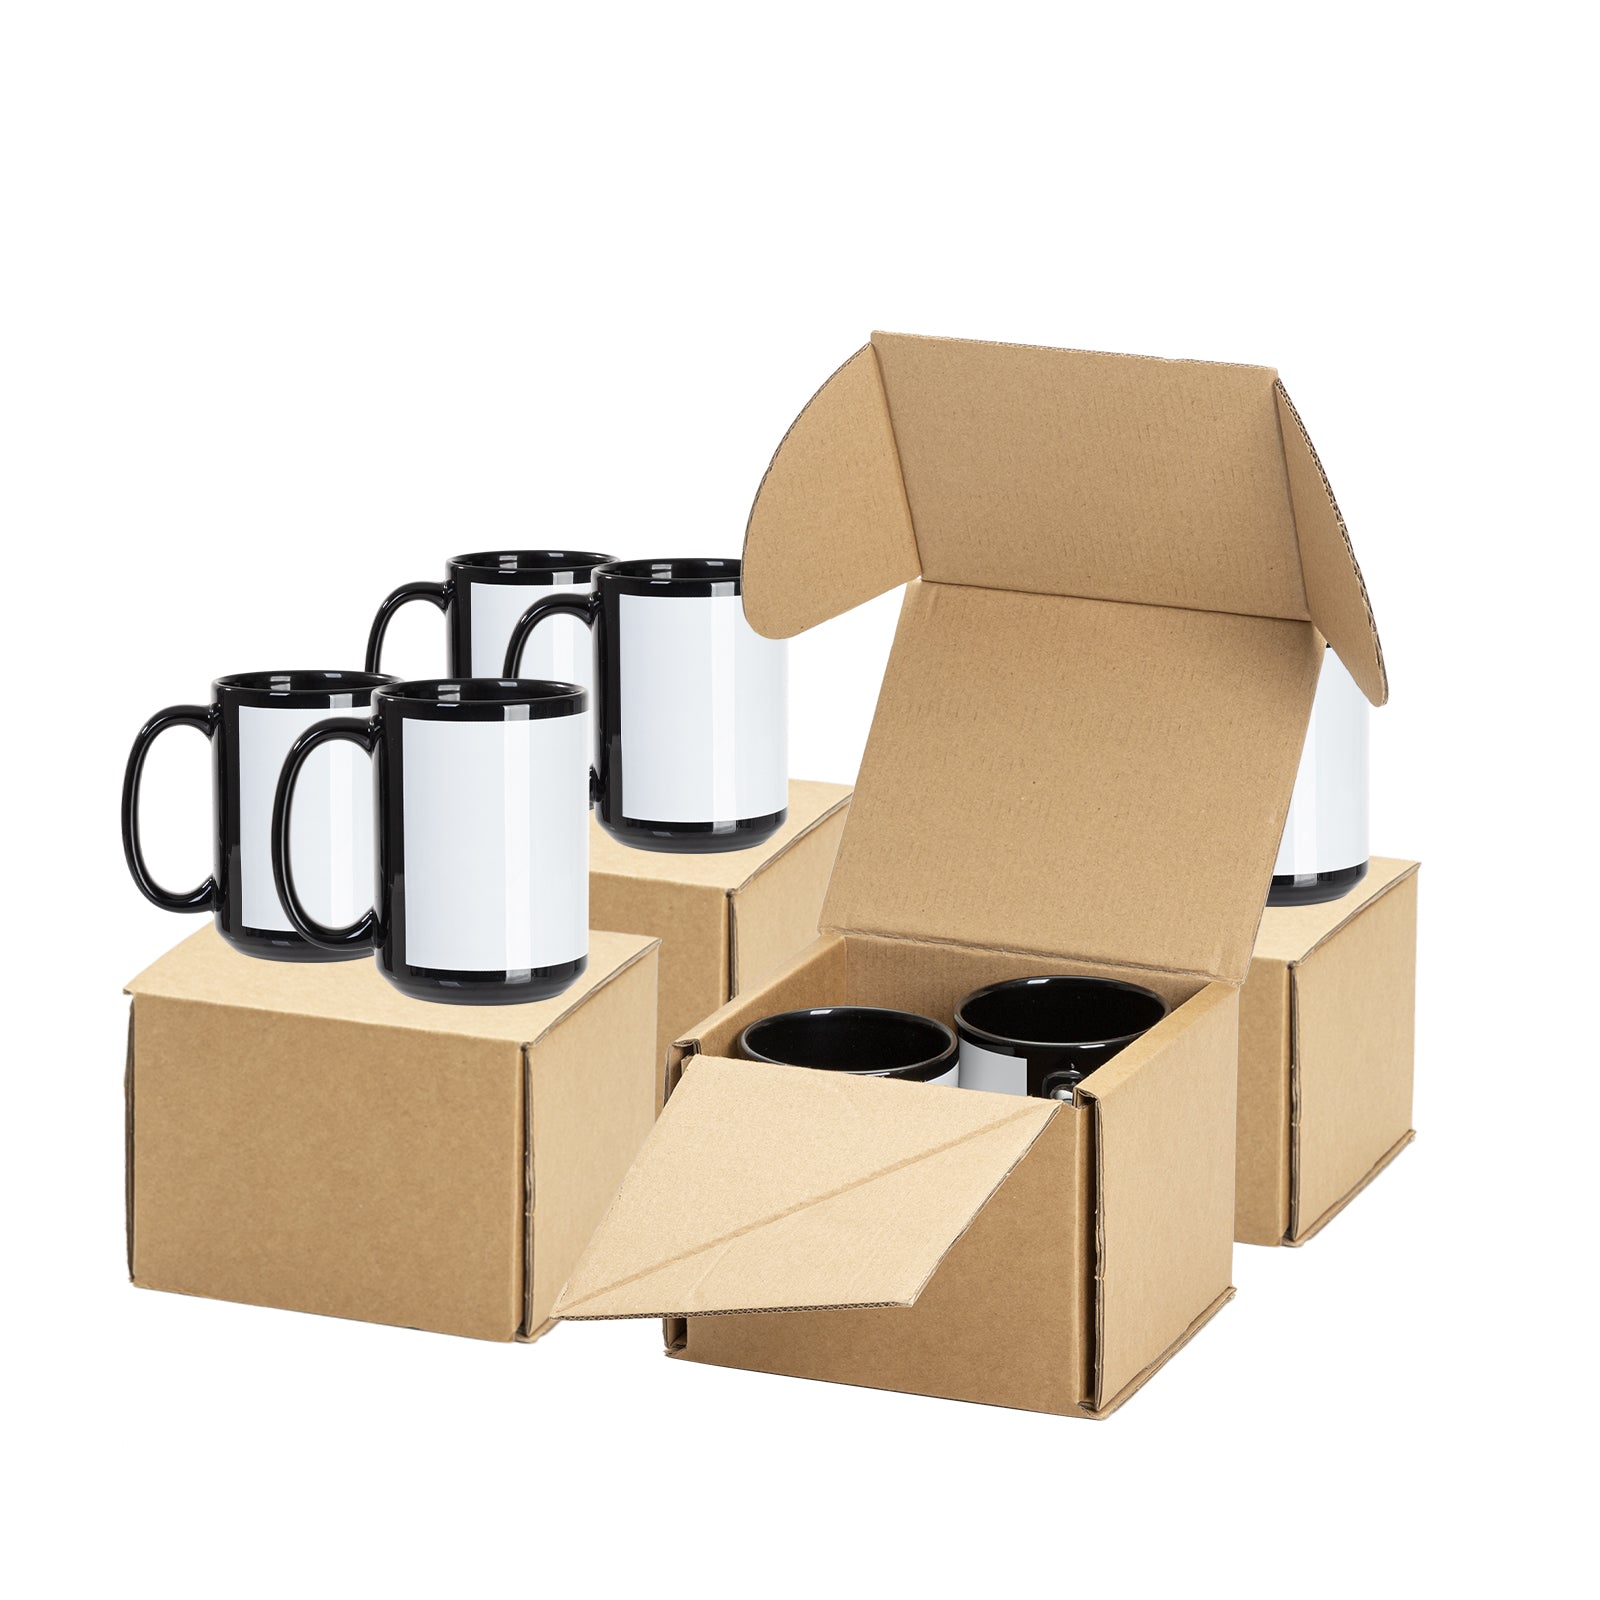 Sublimation Ceramic Coffee Mugs White 11 OZ 8 Pack – PYD LIFE